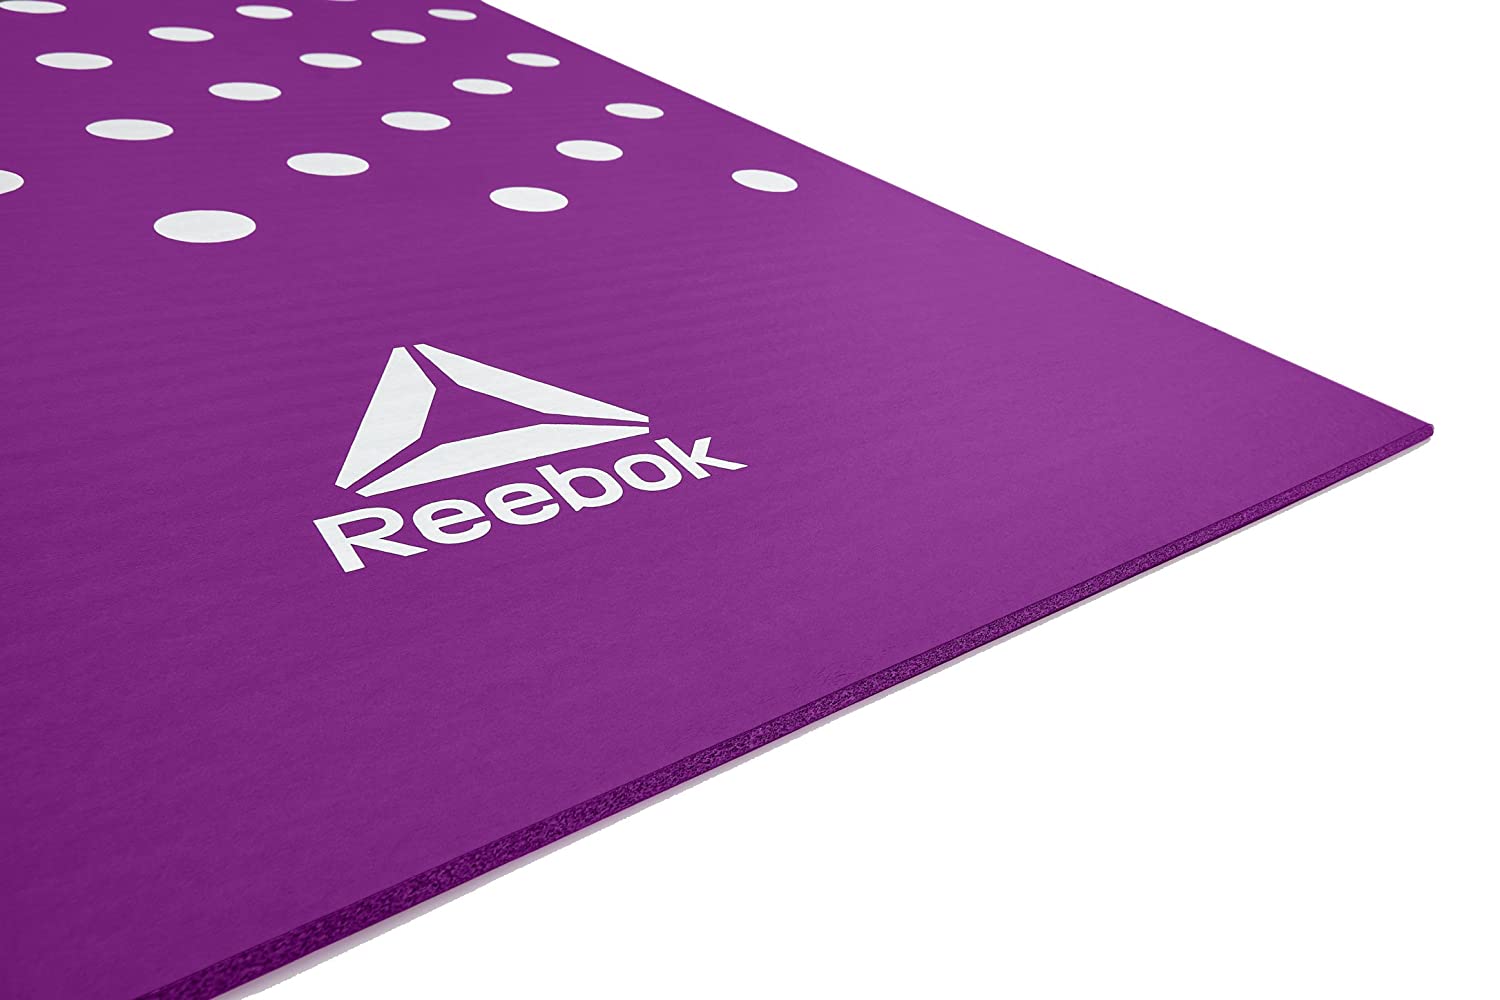 Reebok NBR Spots Unisex Training and Yoga Mat - 7 MM (Purple) - Best Price online Prokicksports.com